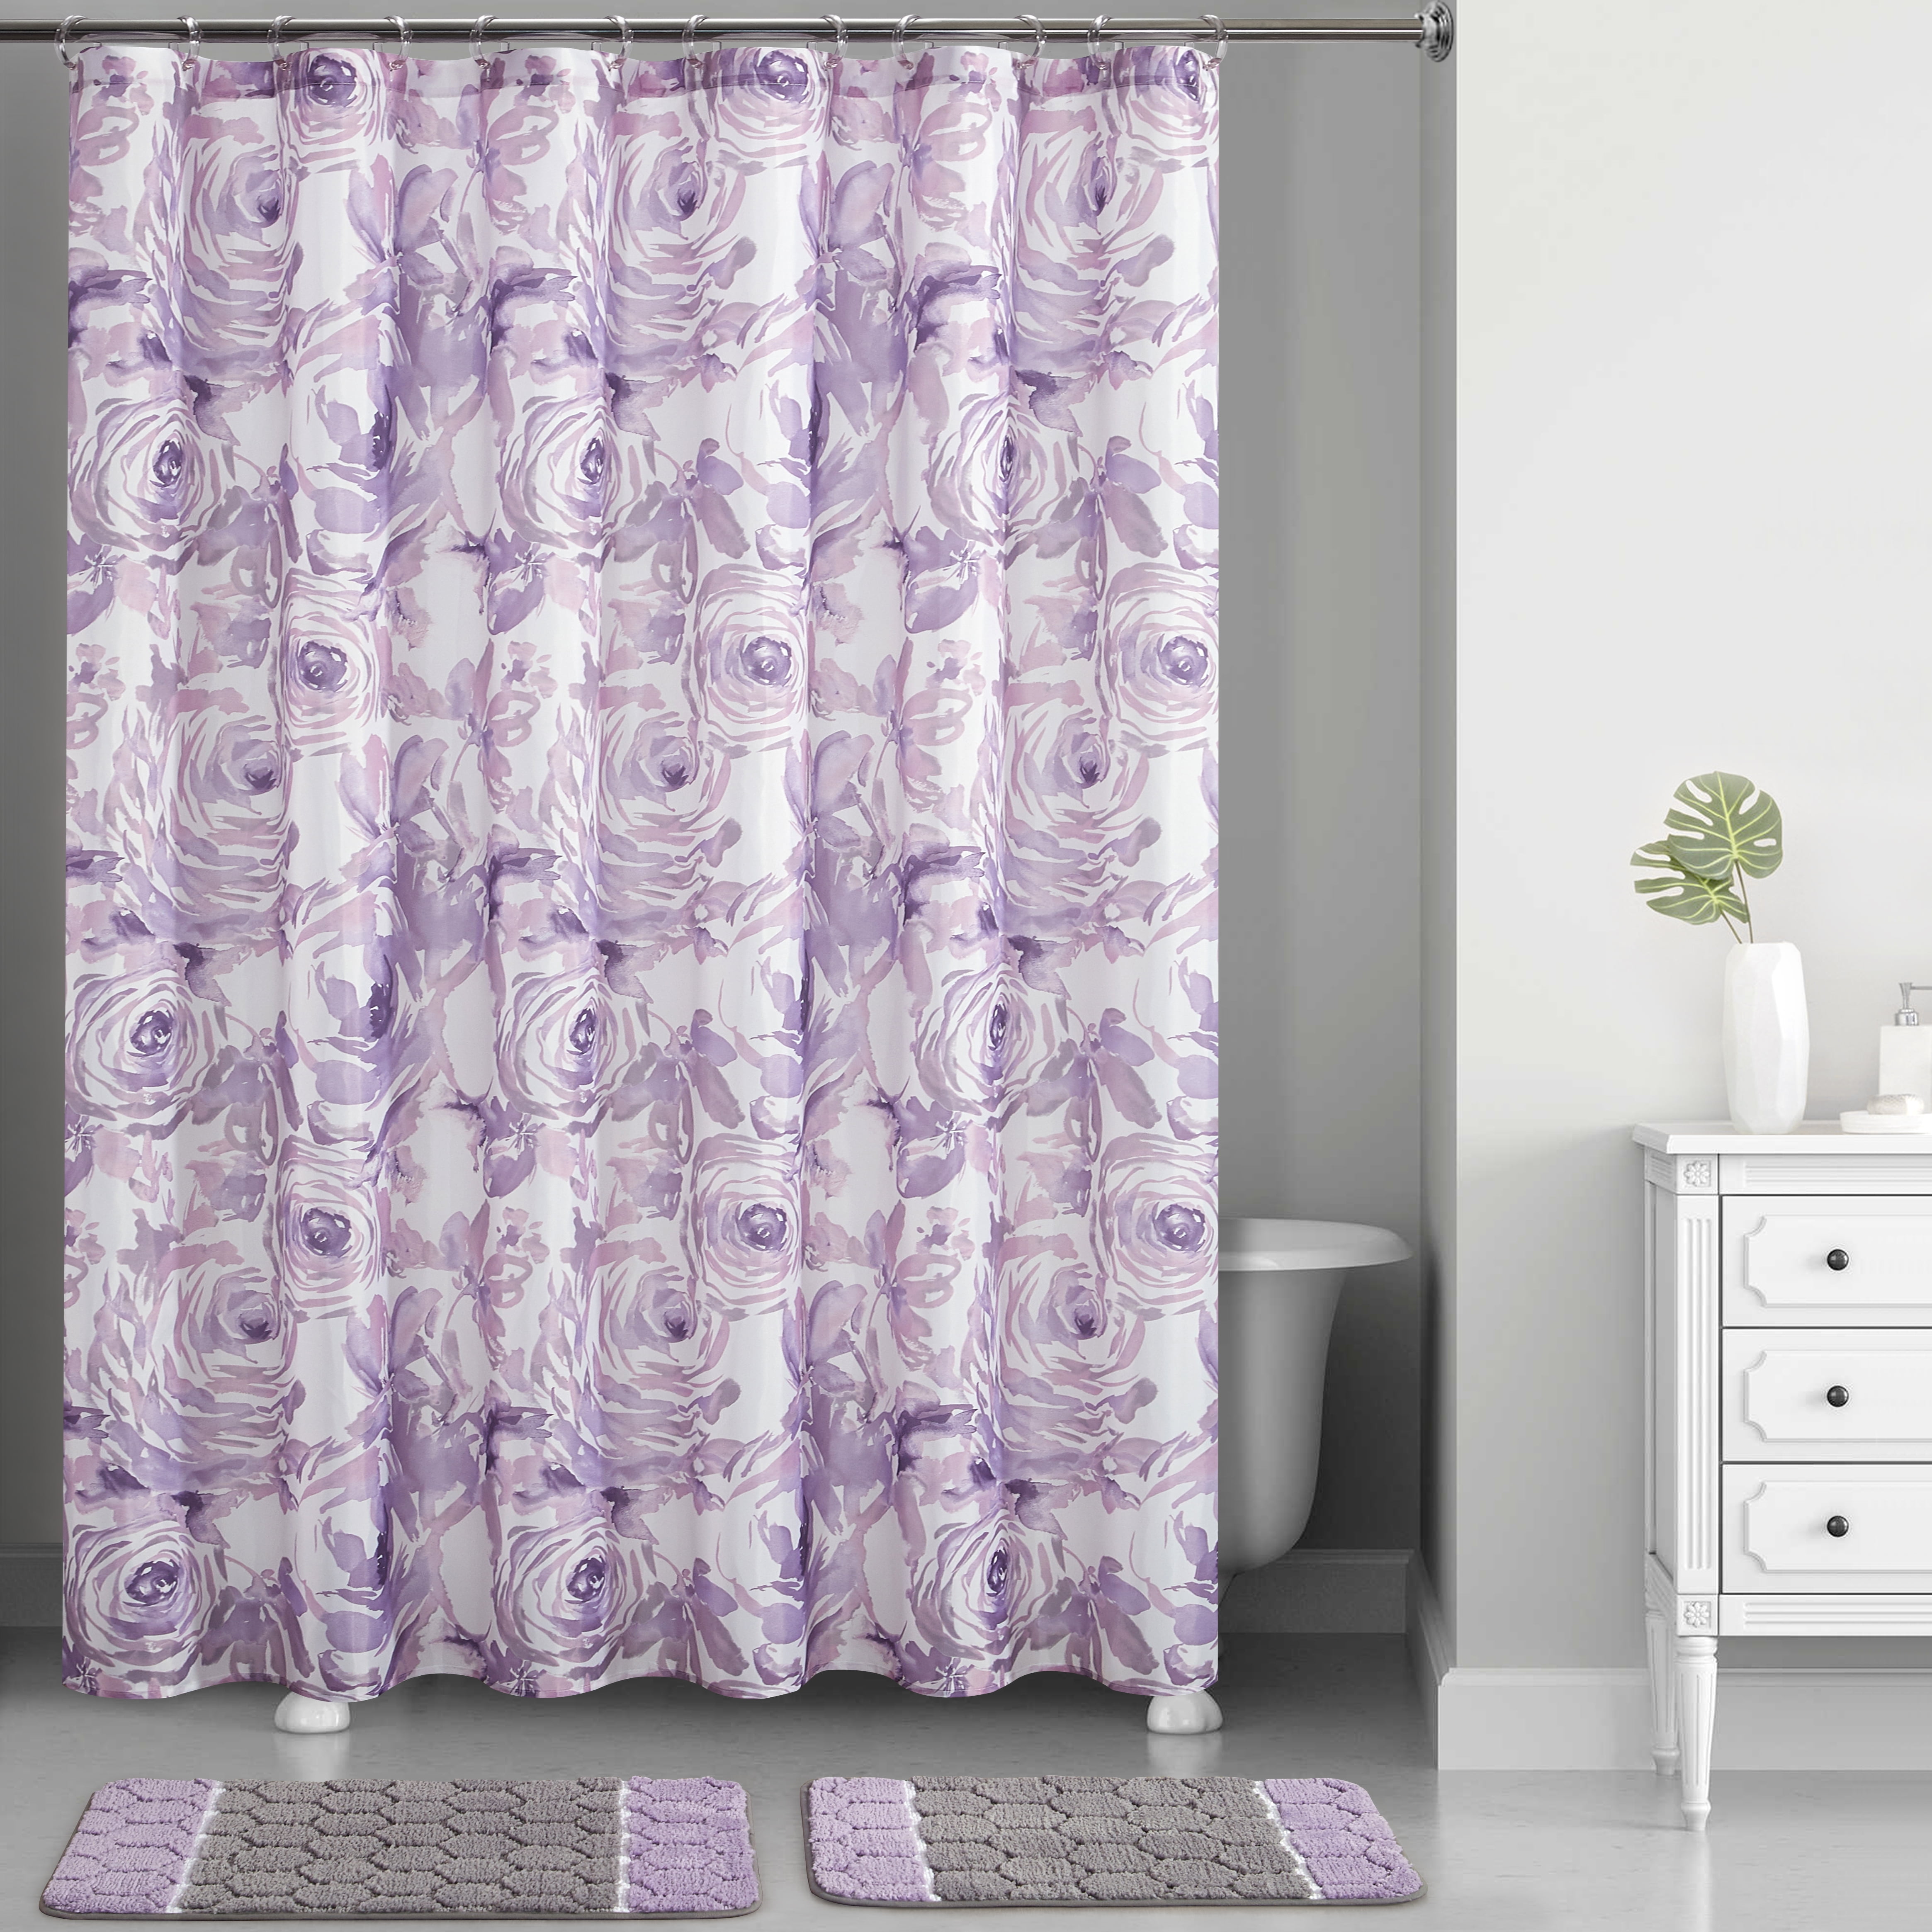 Purple Lavender on A Wooden Board Shower Curtain Bathroom Decor Fabric & 12hooks 